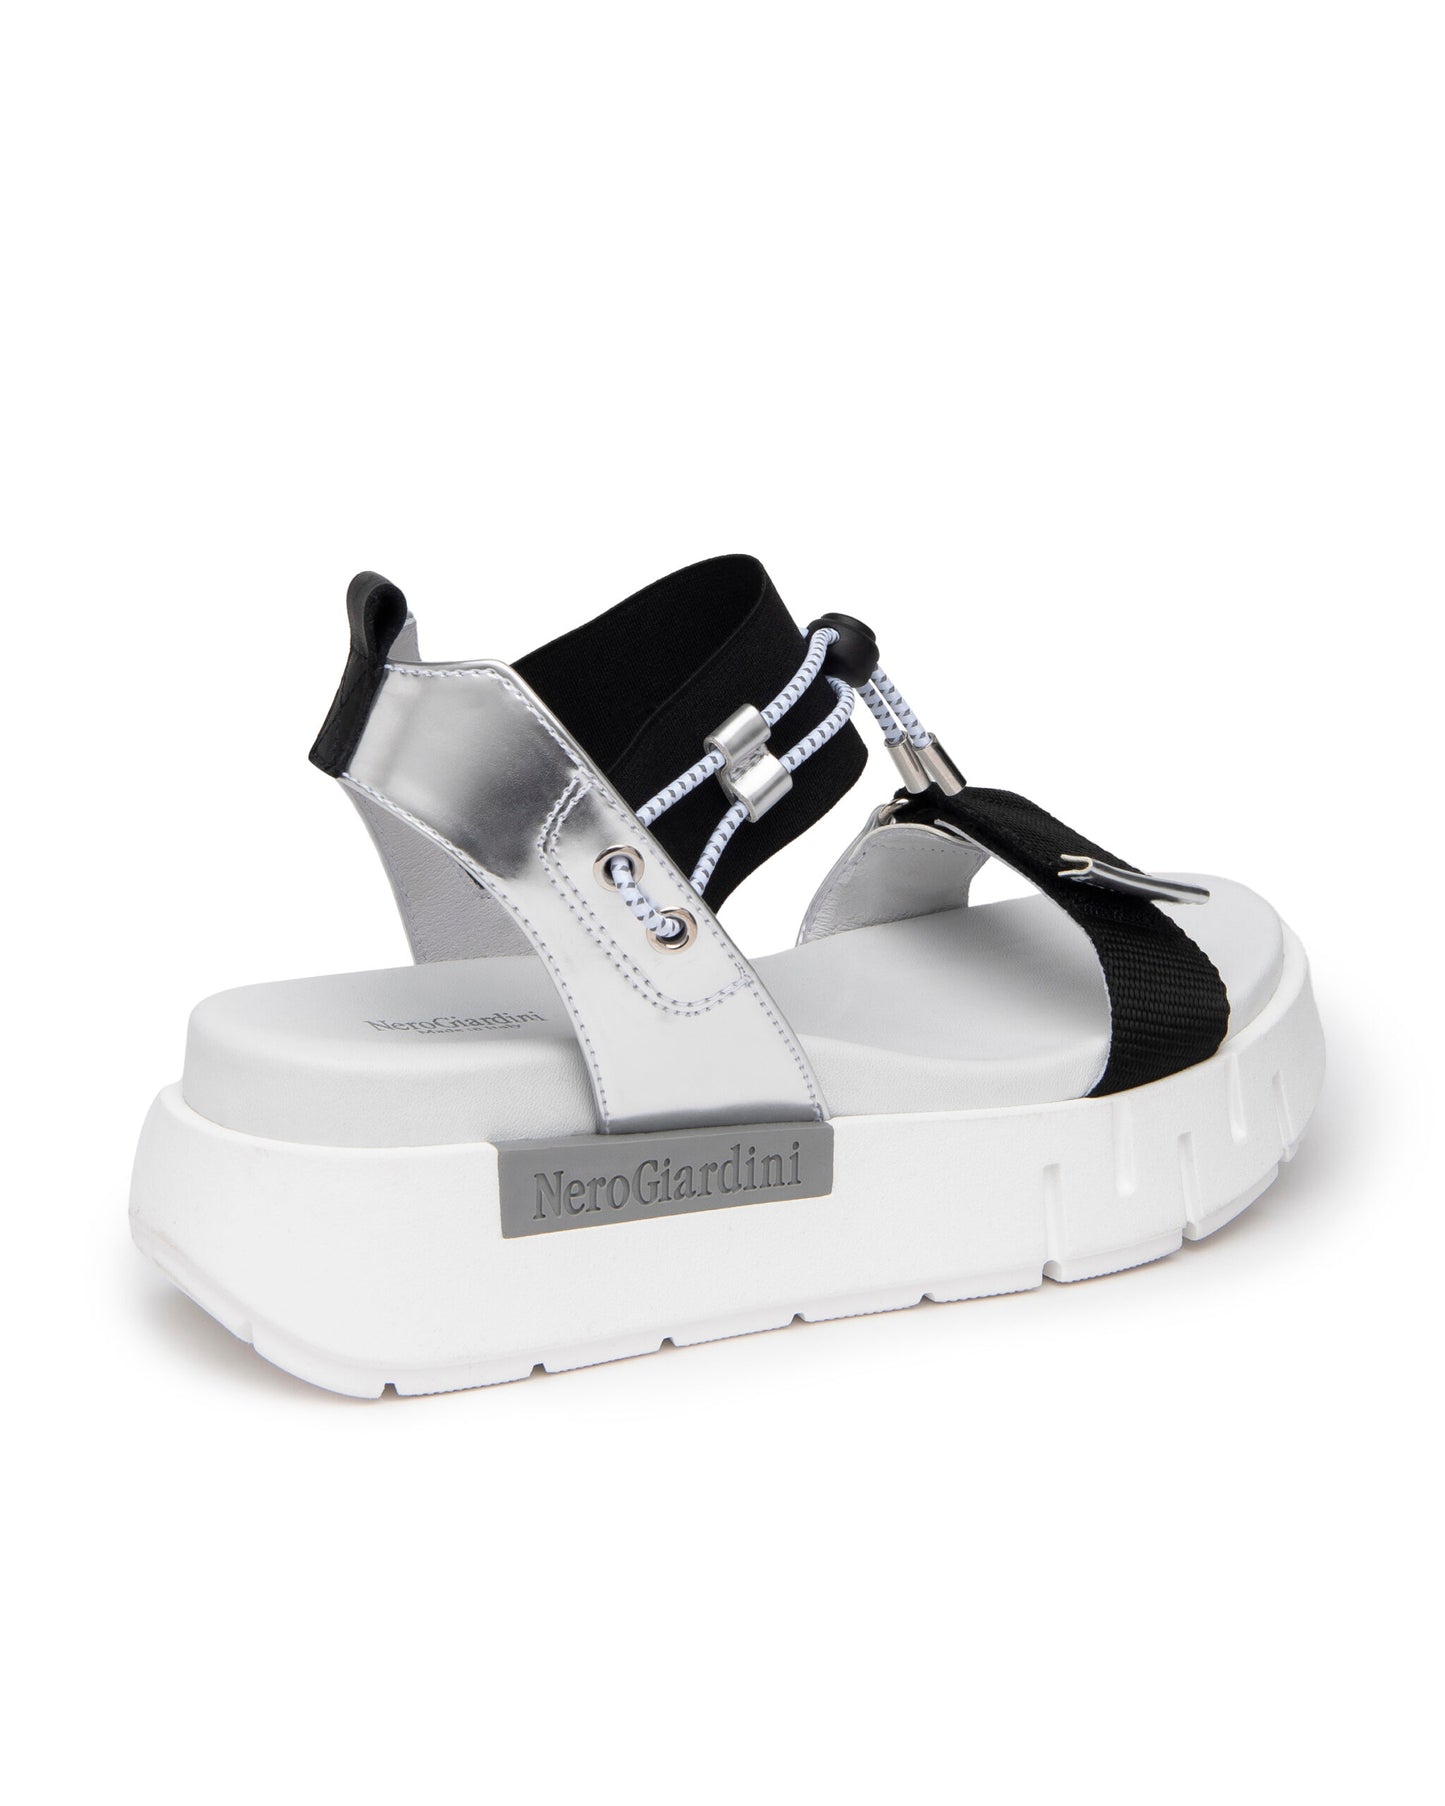 NEROGIARDINI Loira Women's Euro Comfort Flatform Sandal in Black, Silver & White E219025D_700